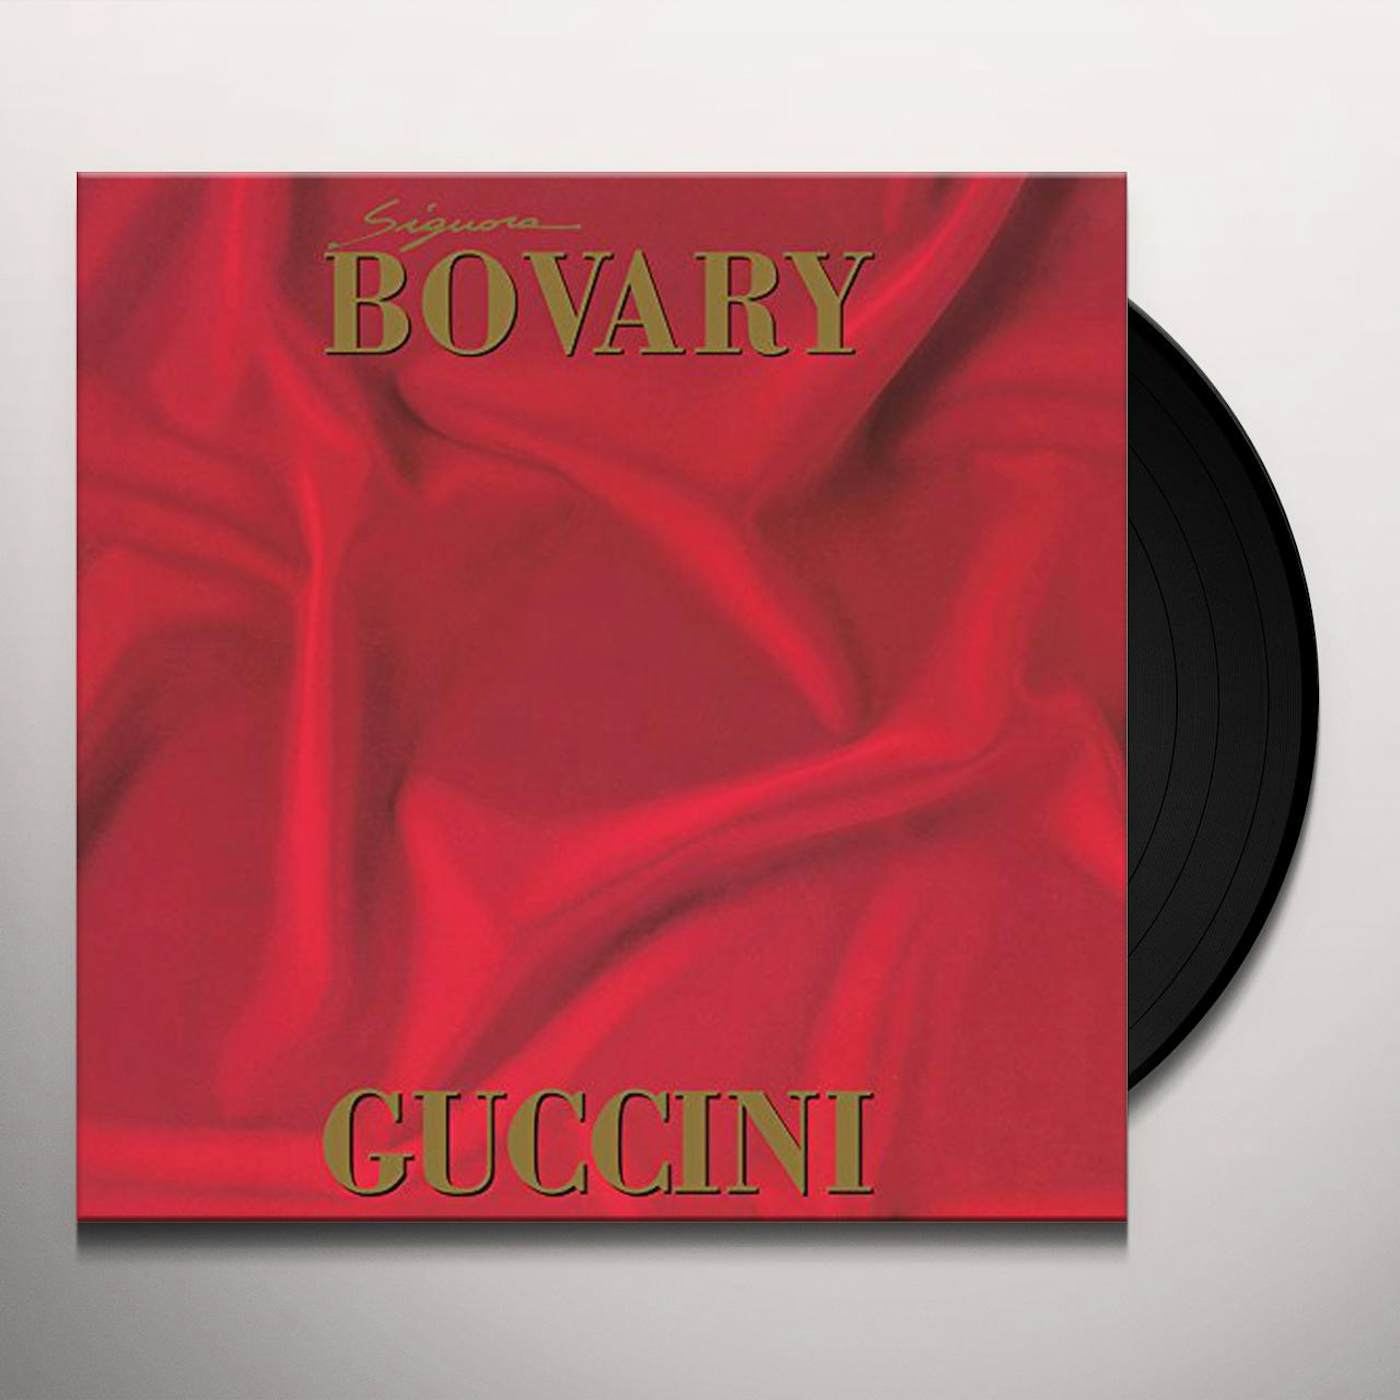 Francesco Guccini Signora Bovary Vinyl Record